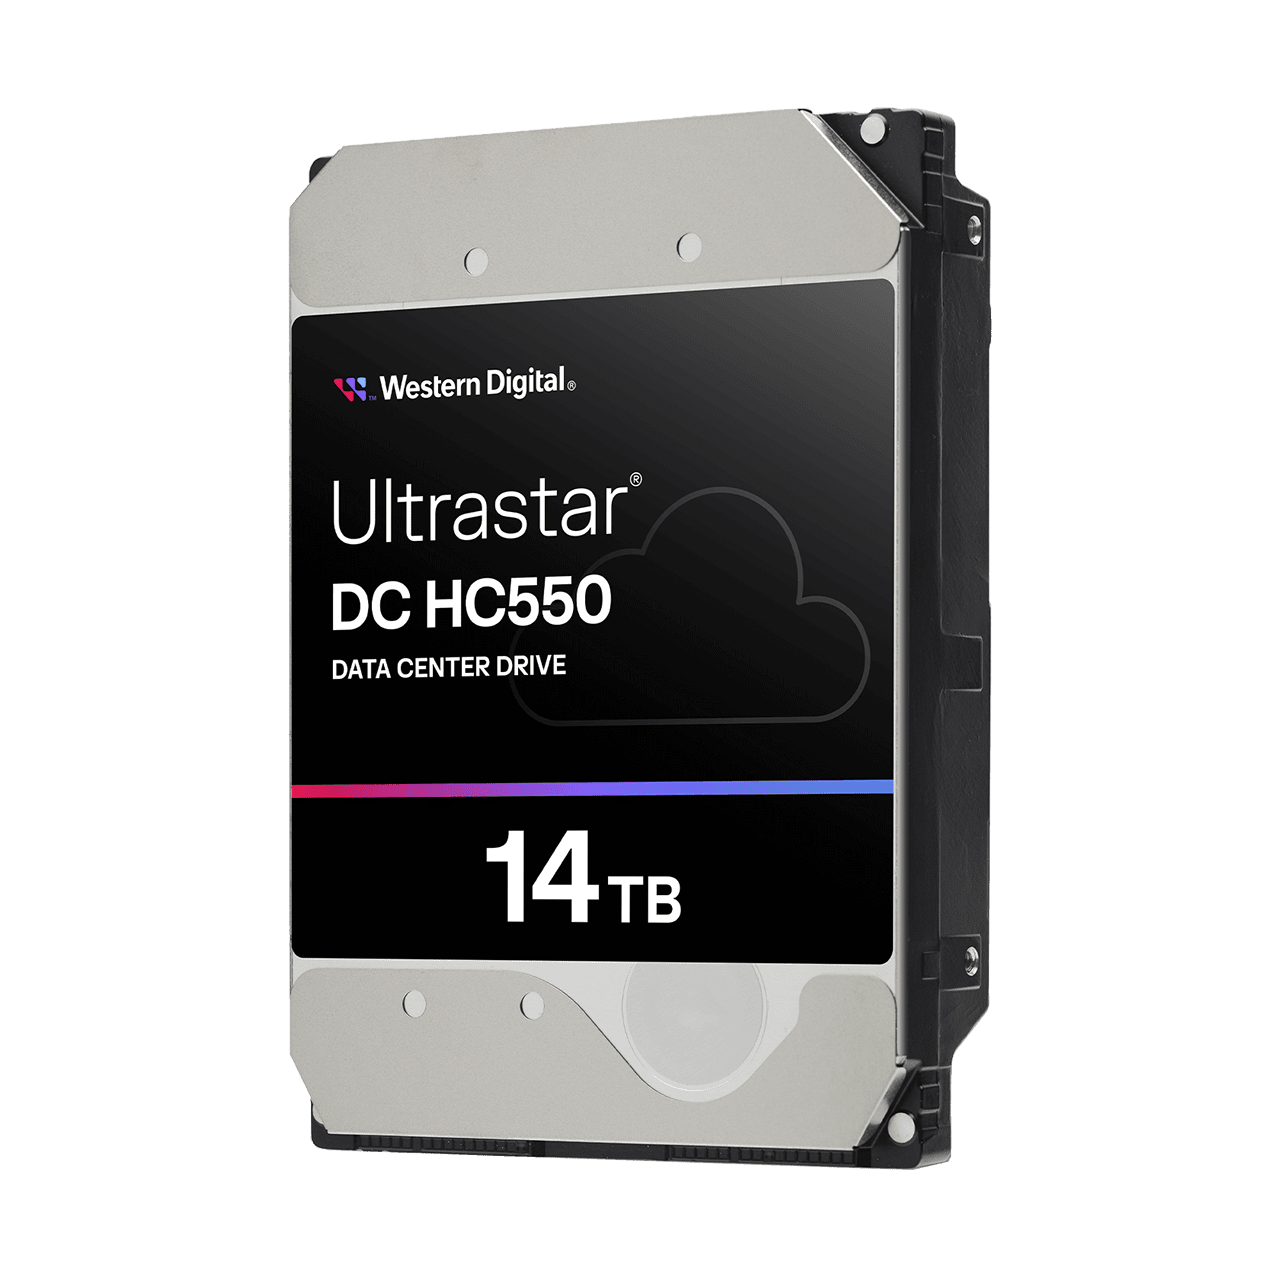 Ultrastar® DC HC550 - 14TB - Image1